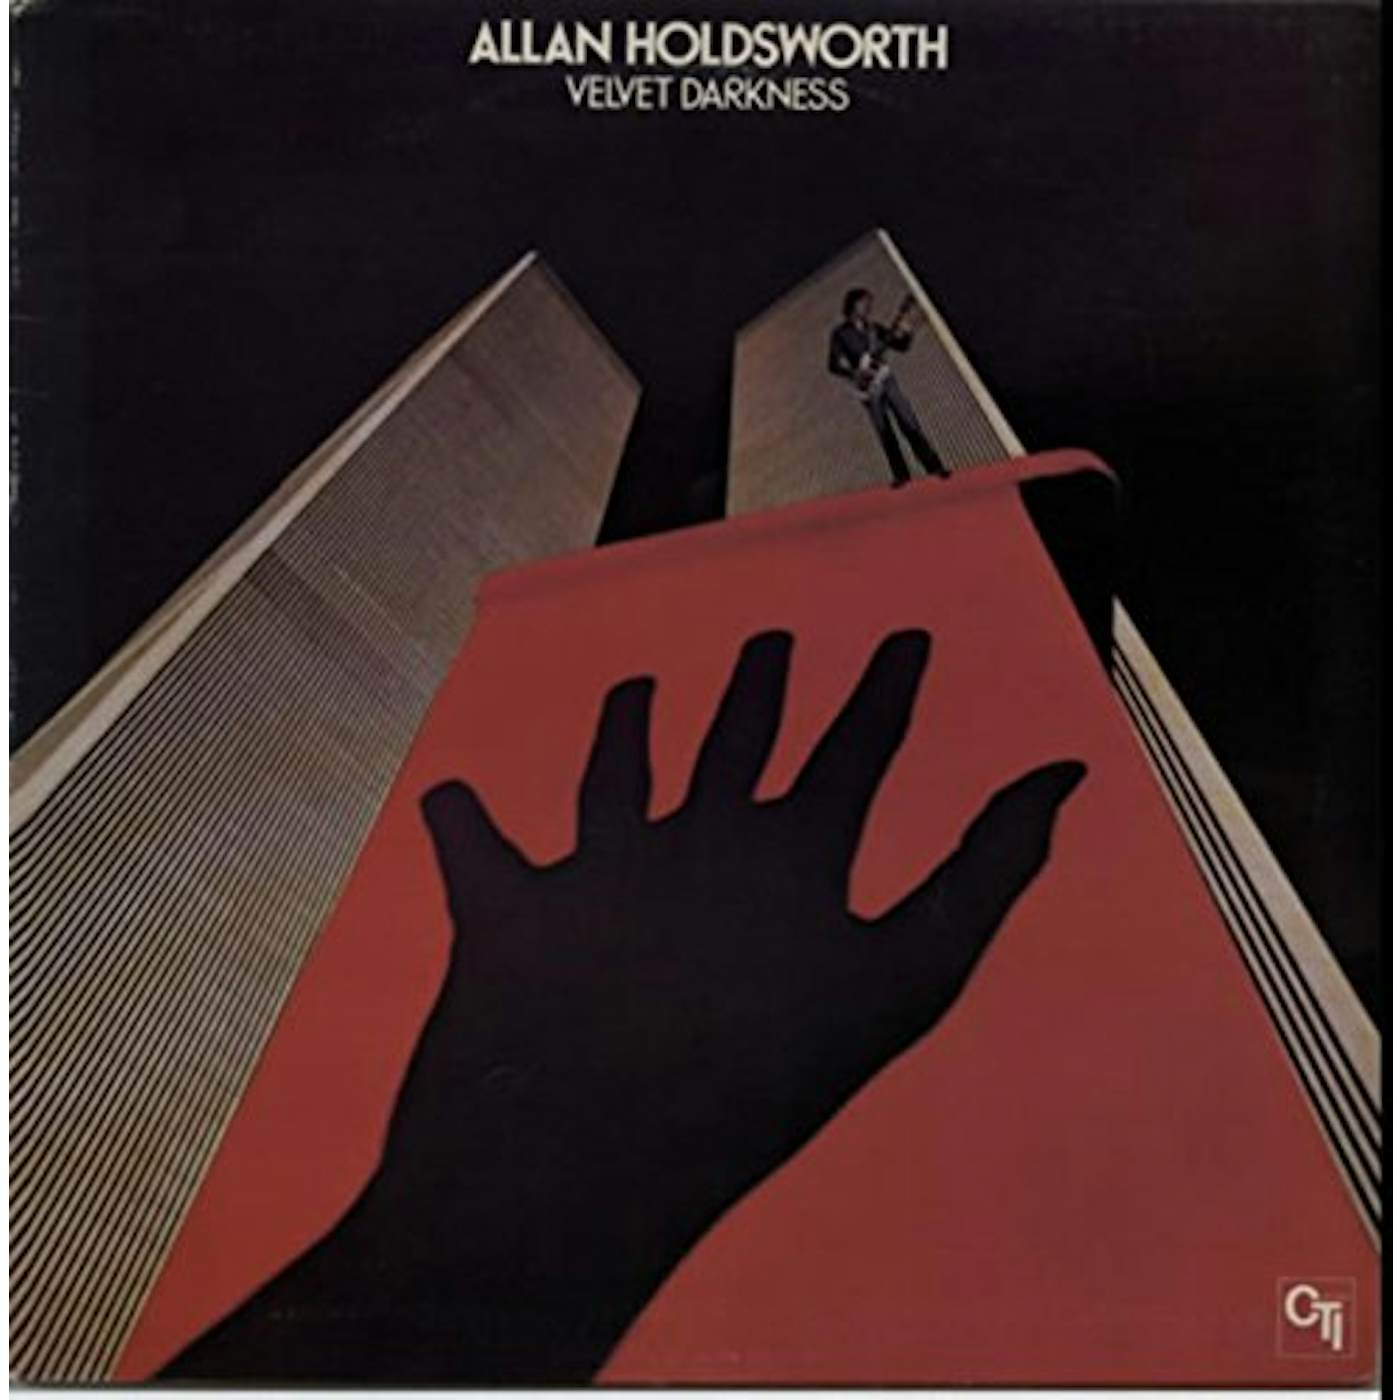 Allan Holdsworth VELVET DARKNESS CD